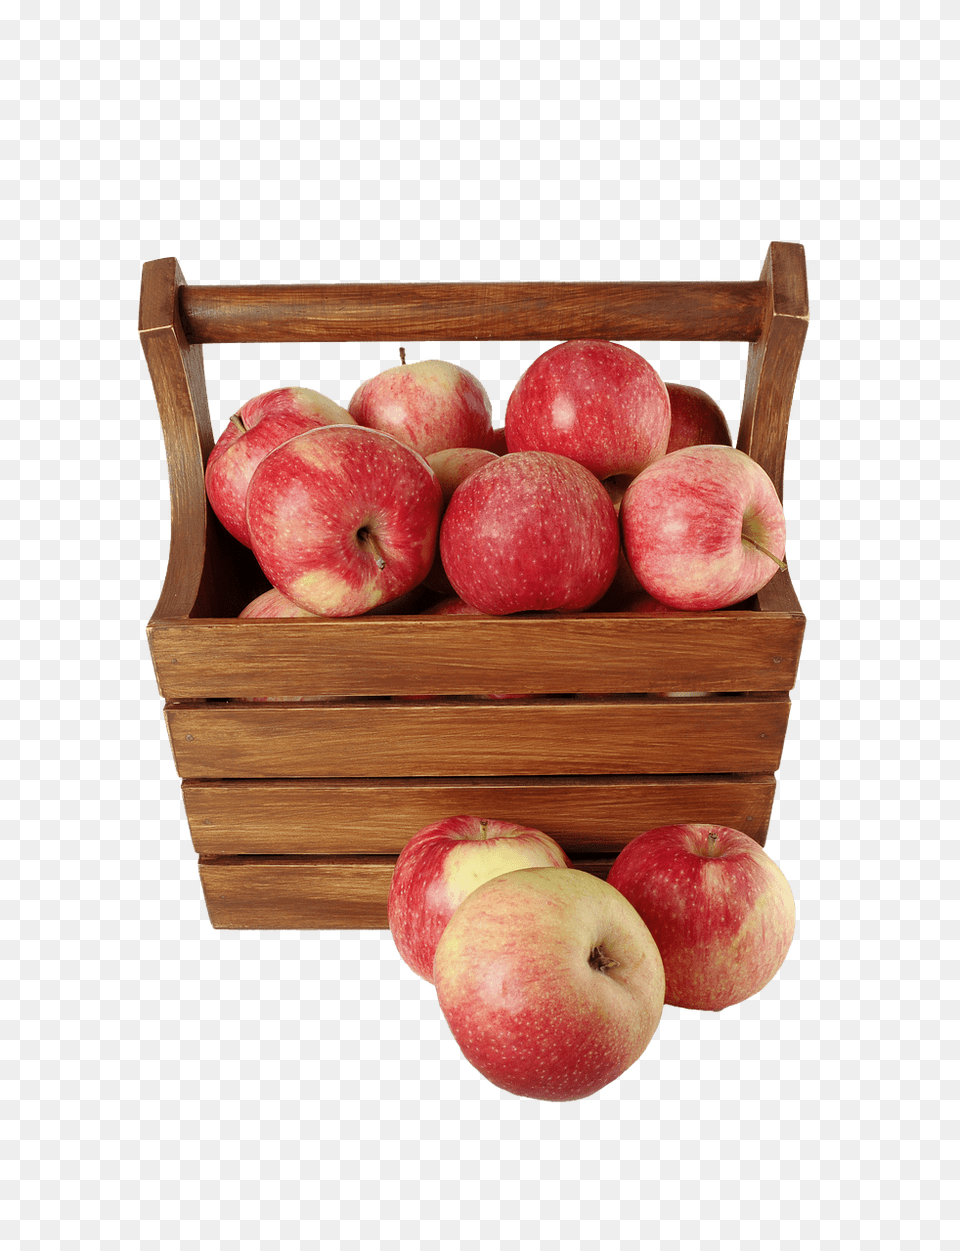 Appels In Wooden Case, Food, Fruit, Plant, Produce Free Transparent Png